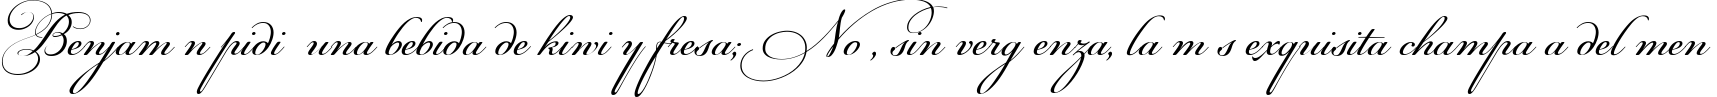 Пример написания шрифтом Maria Antuanetta текста на испанском